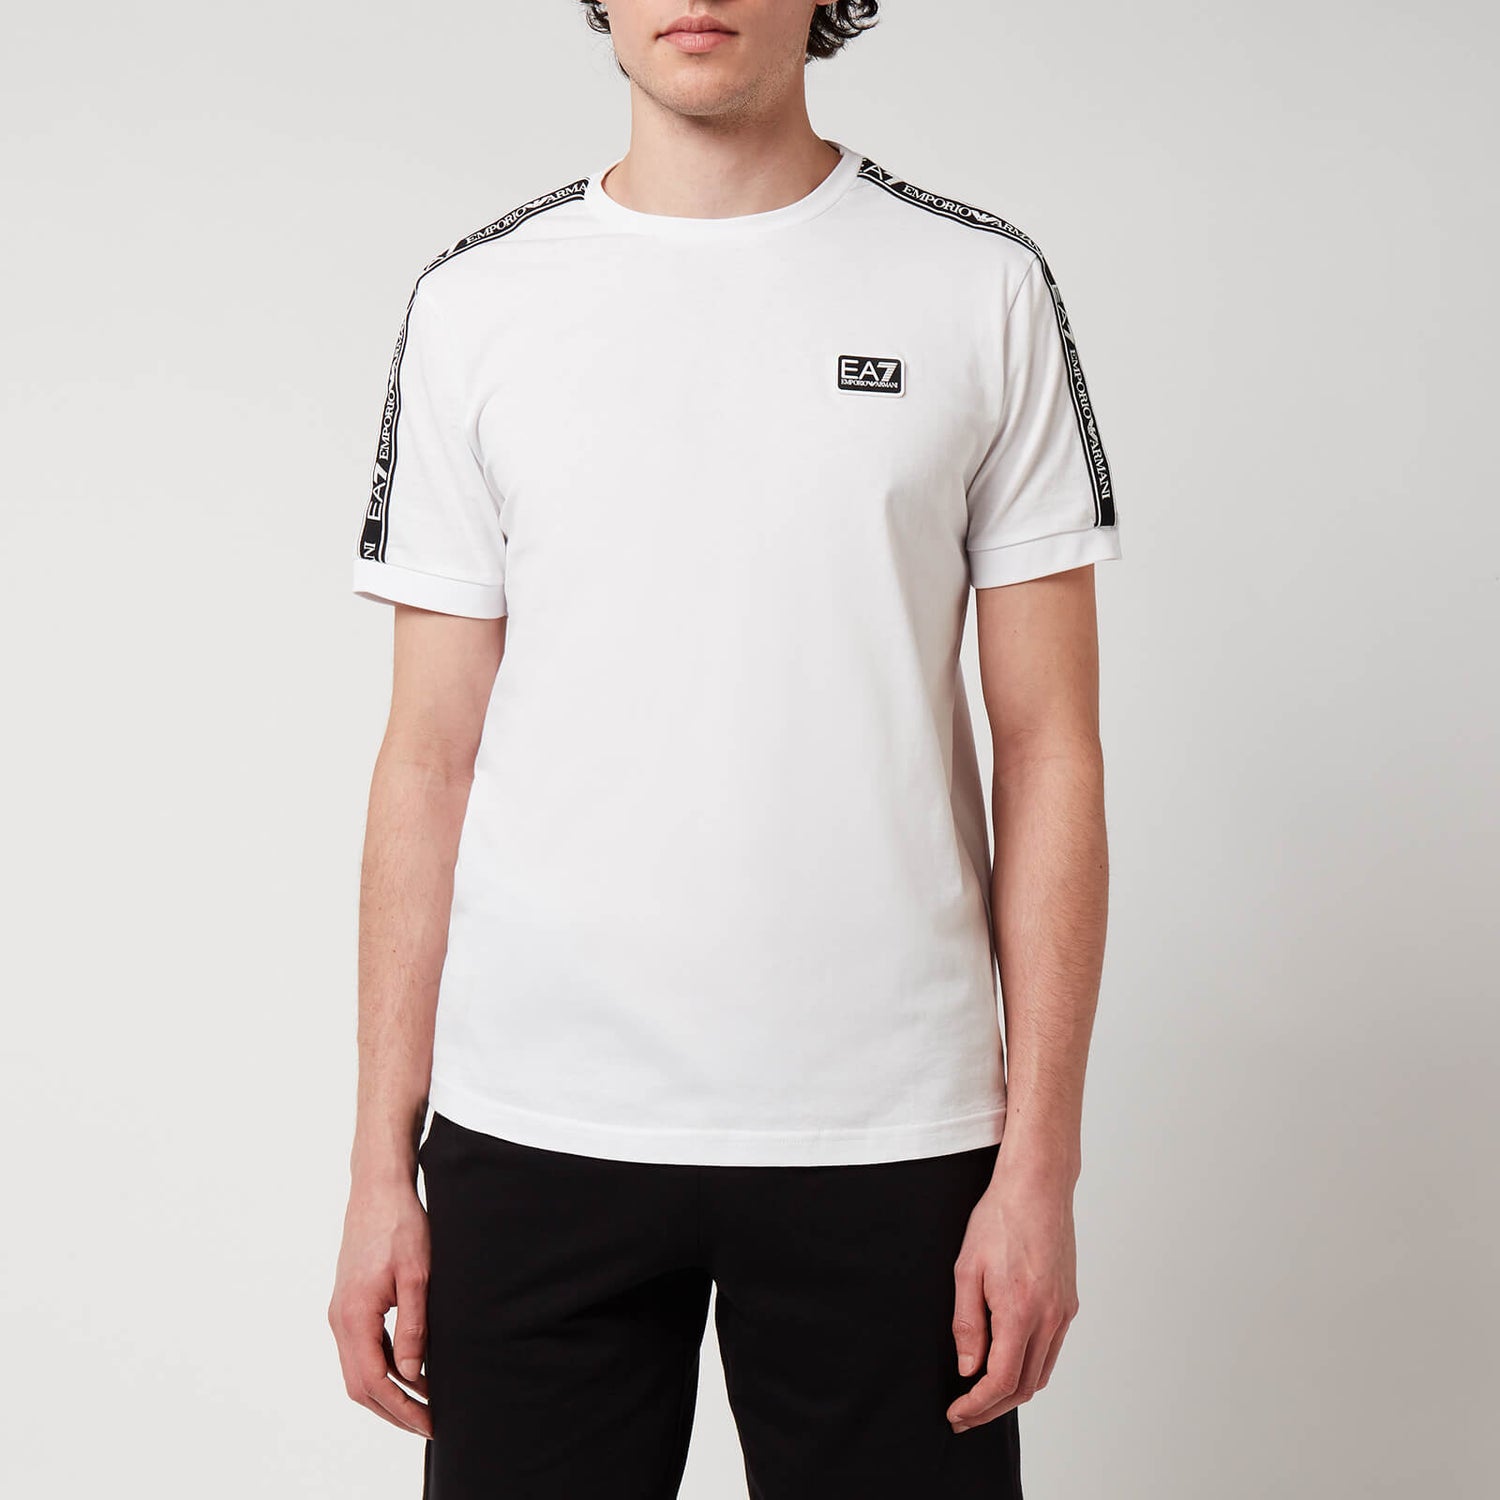 EA7 Men's Logo Series T-Shirt - White - L